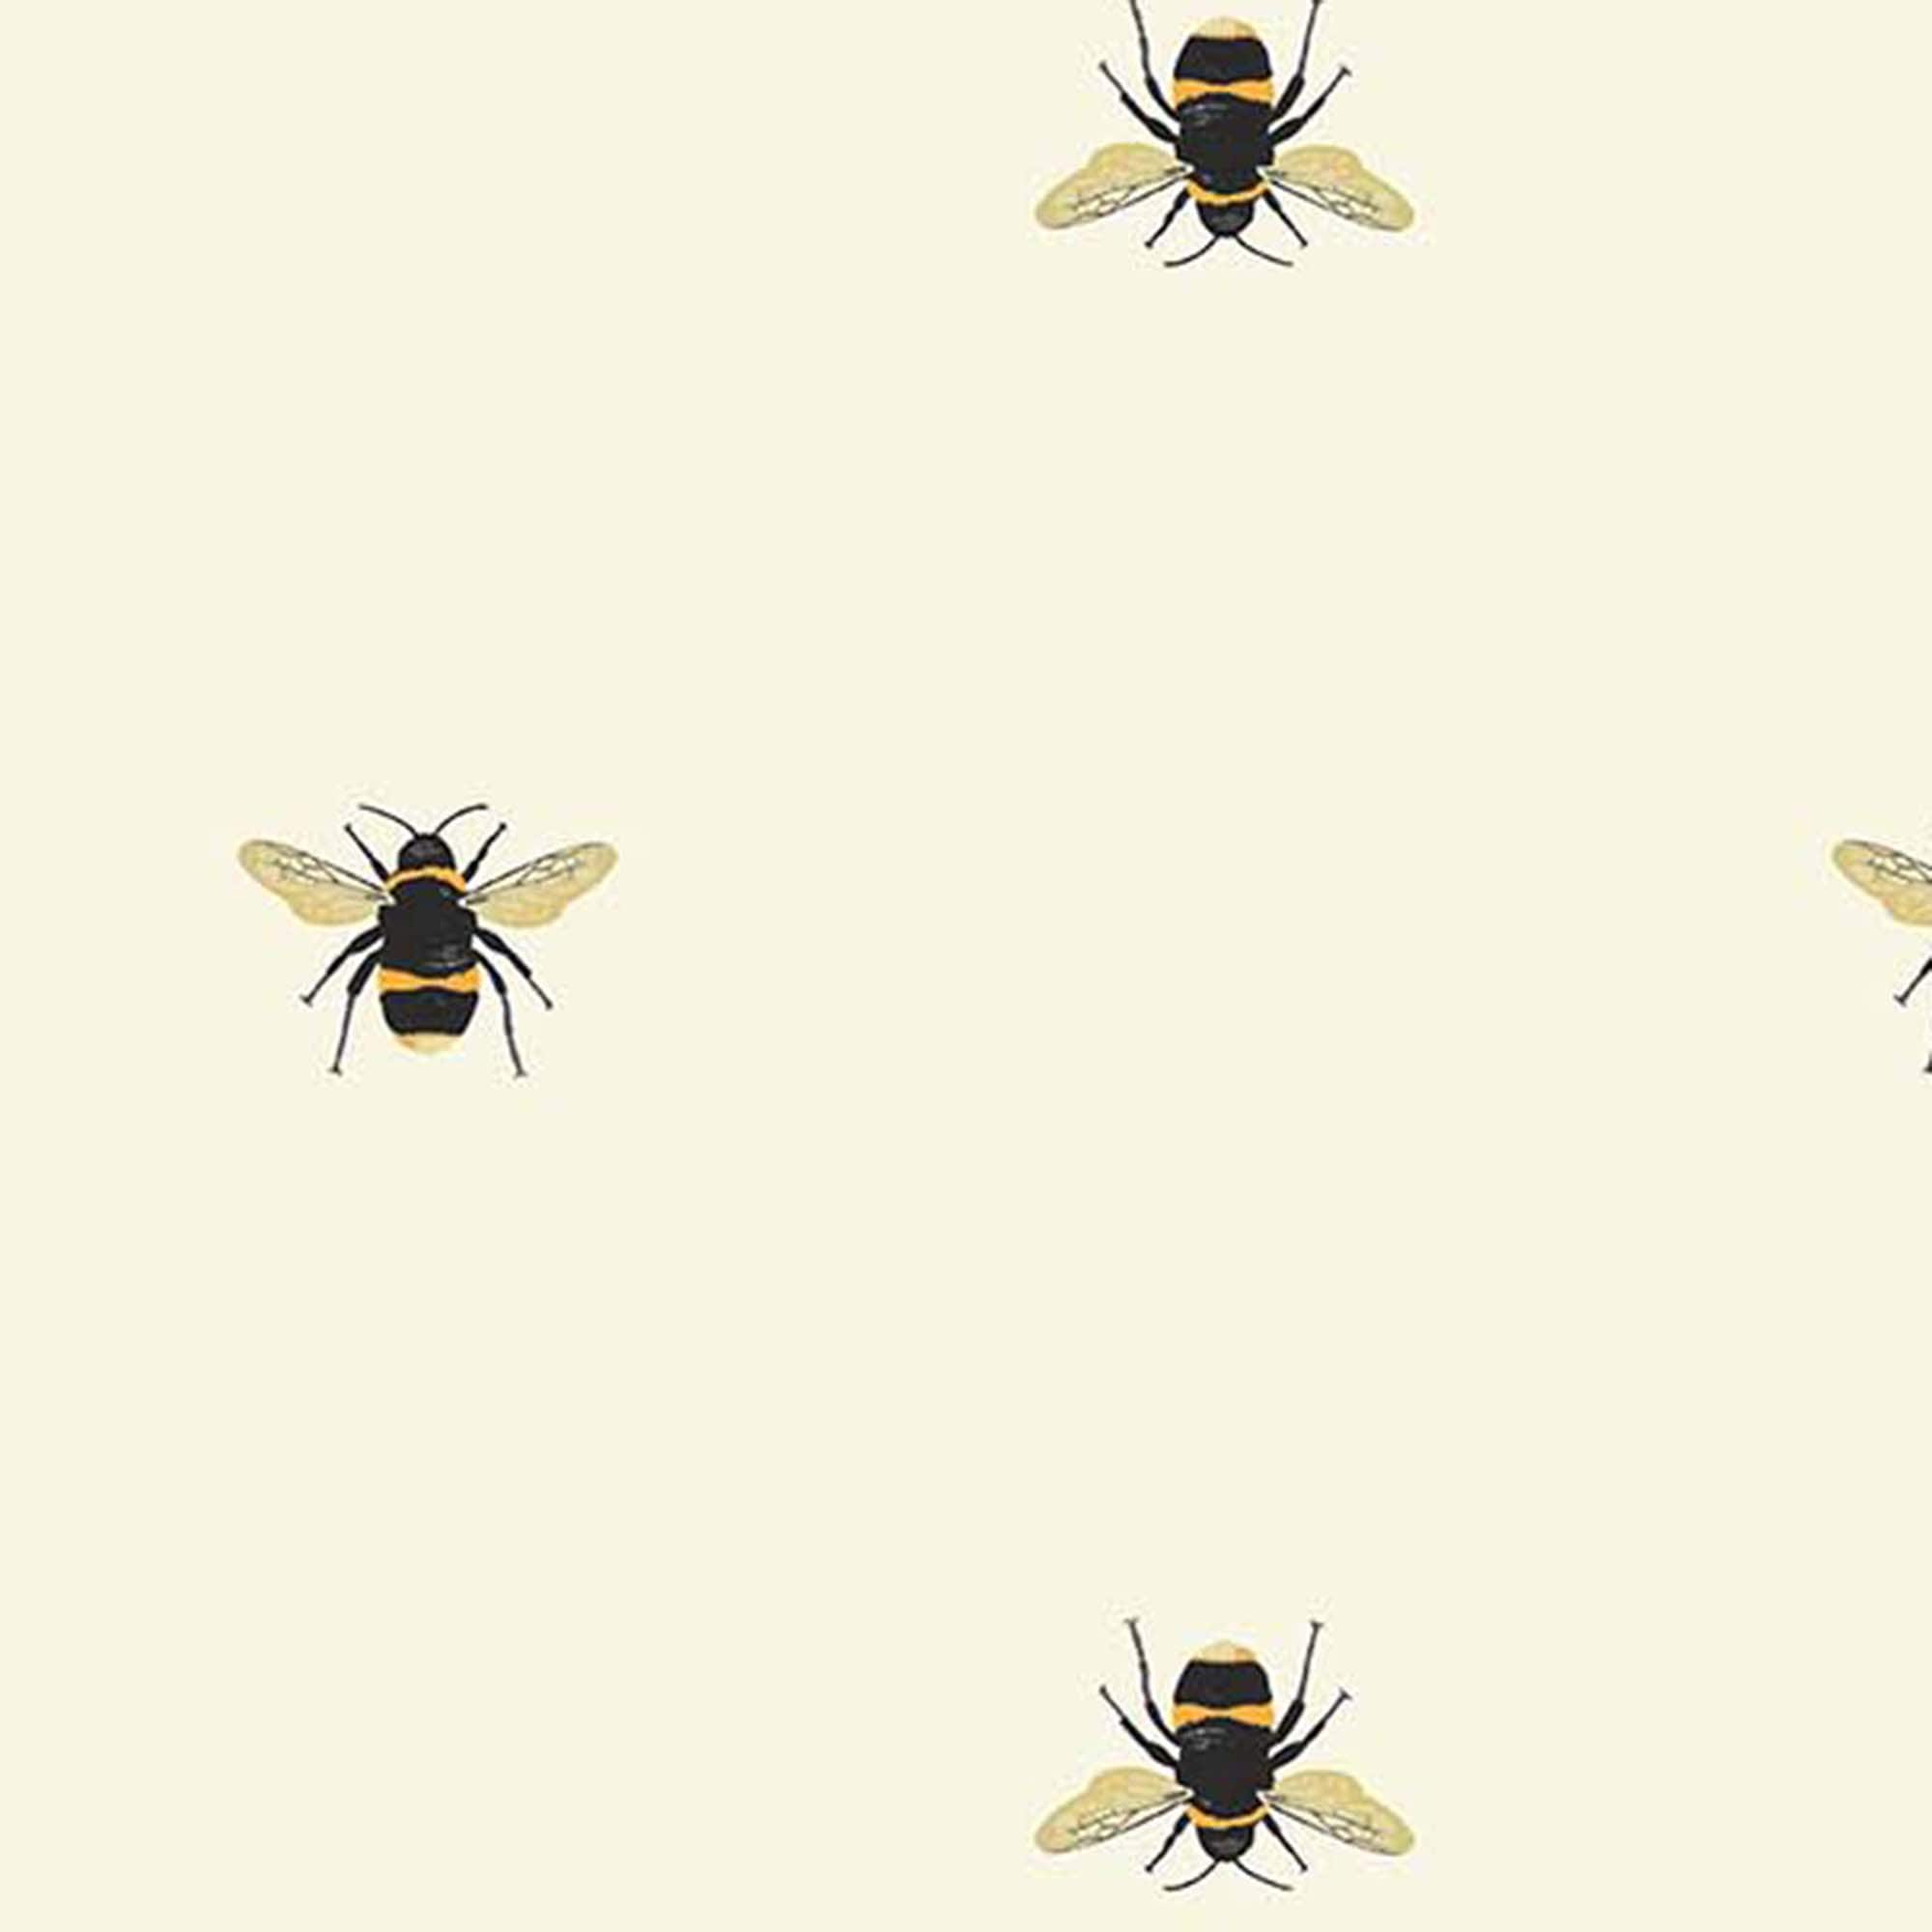 4,594 Lady Bug Wallpaper Images, Stock Photos & Vectors | Shutterstock